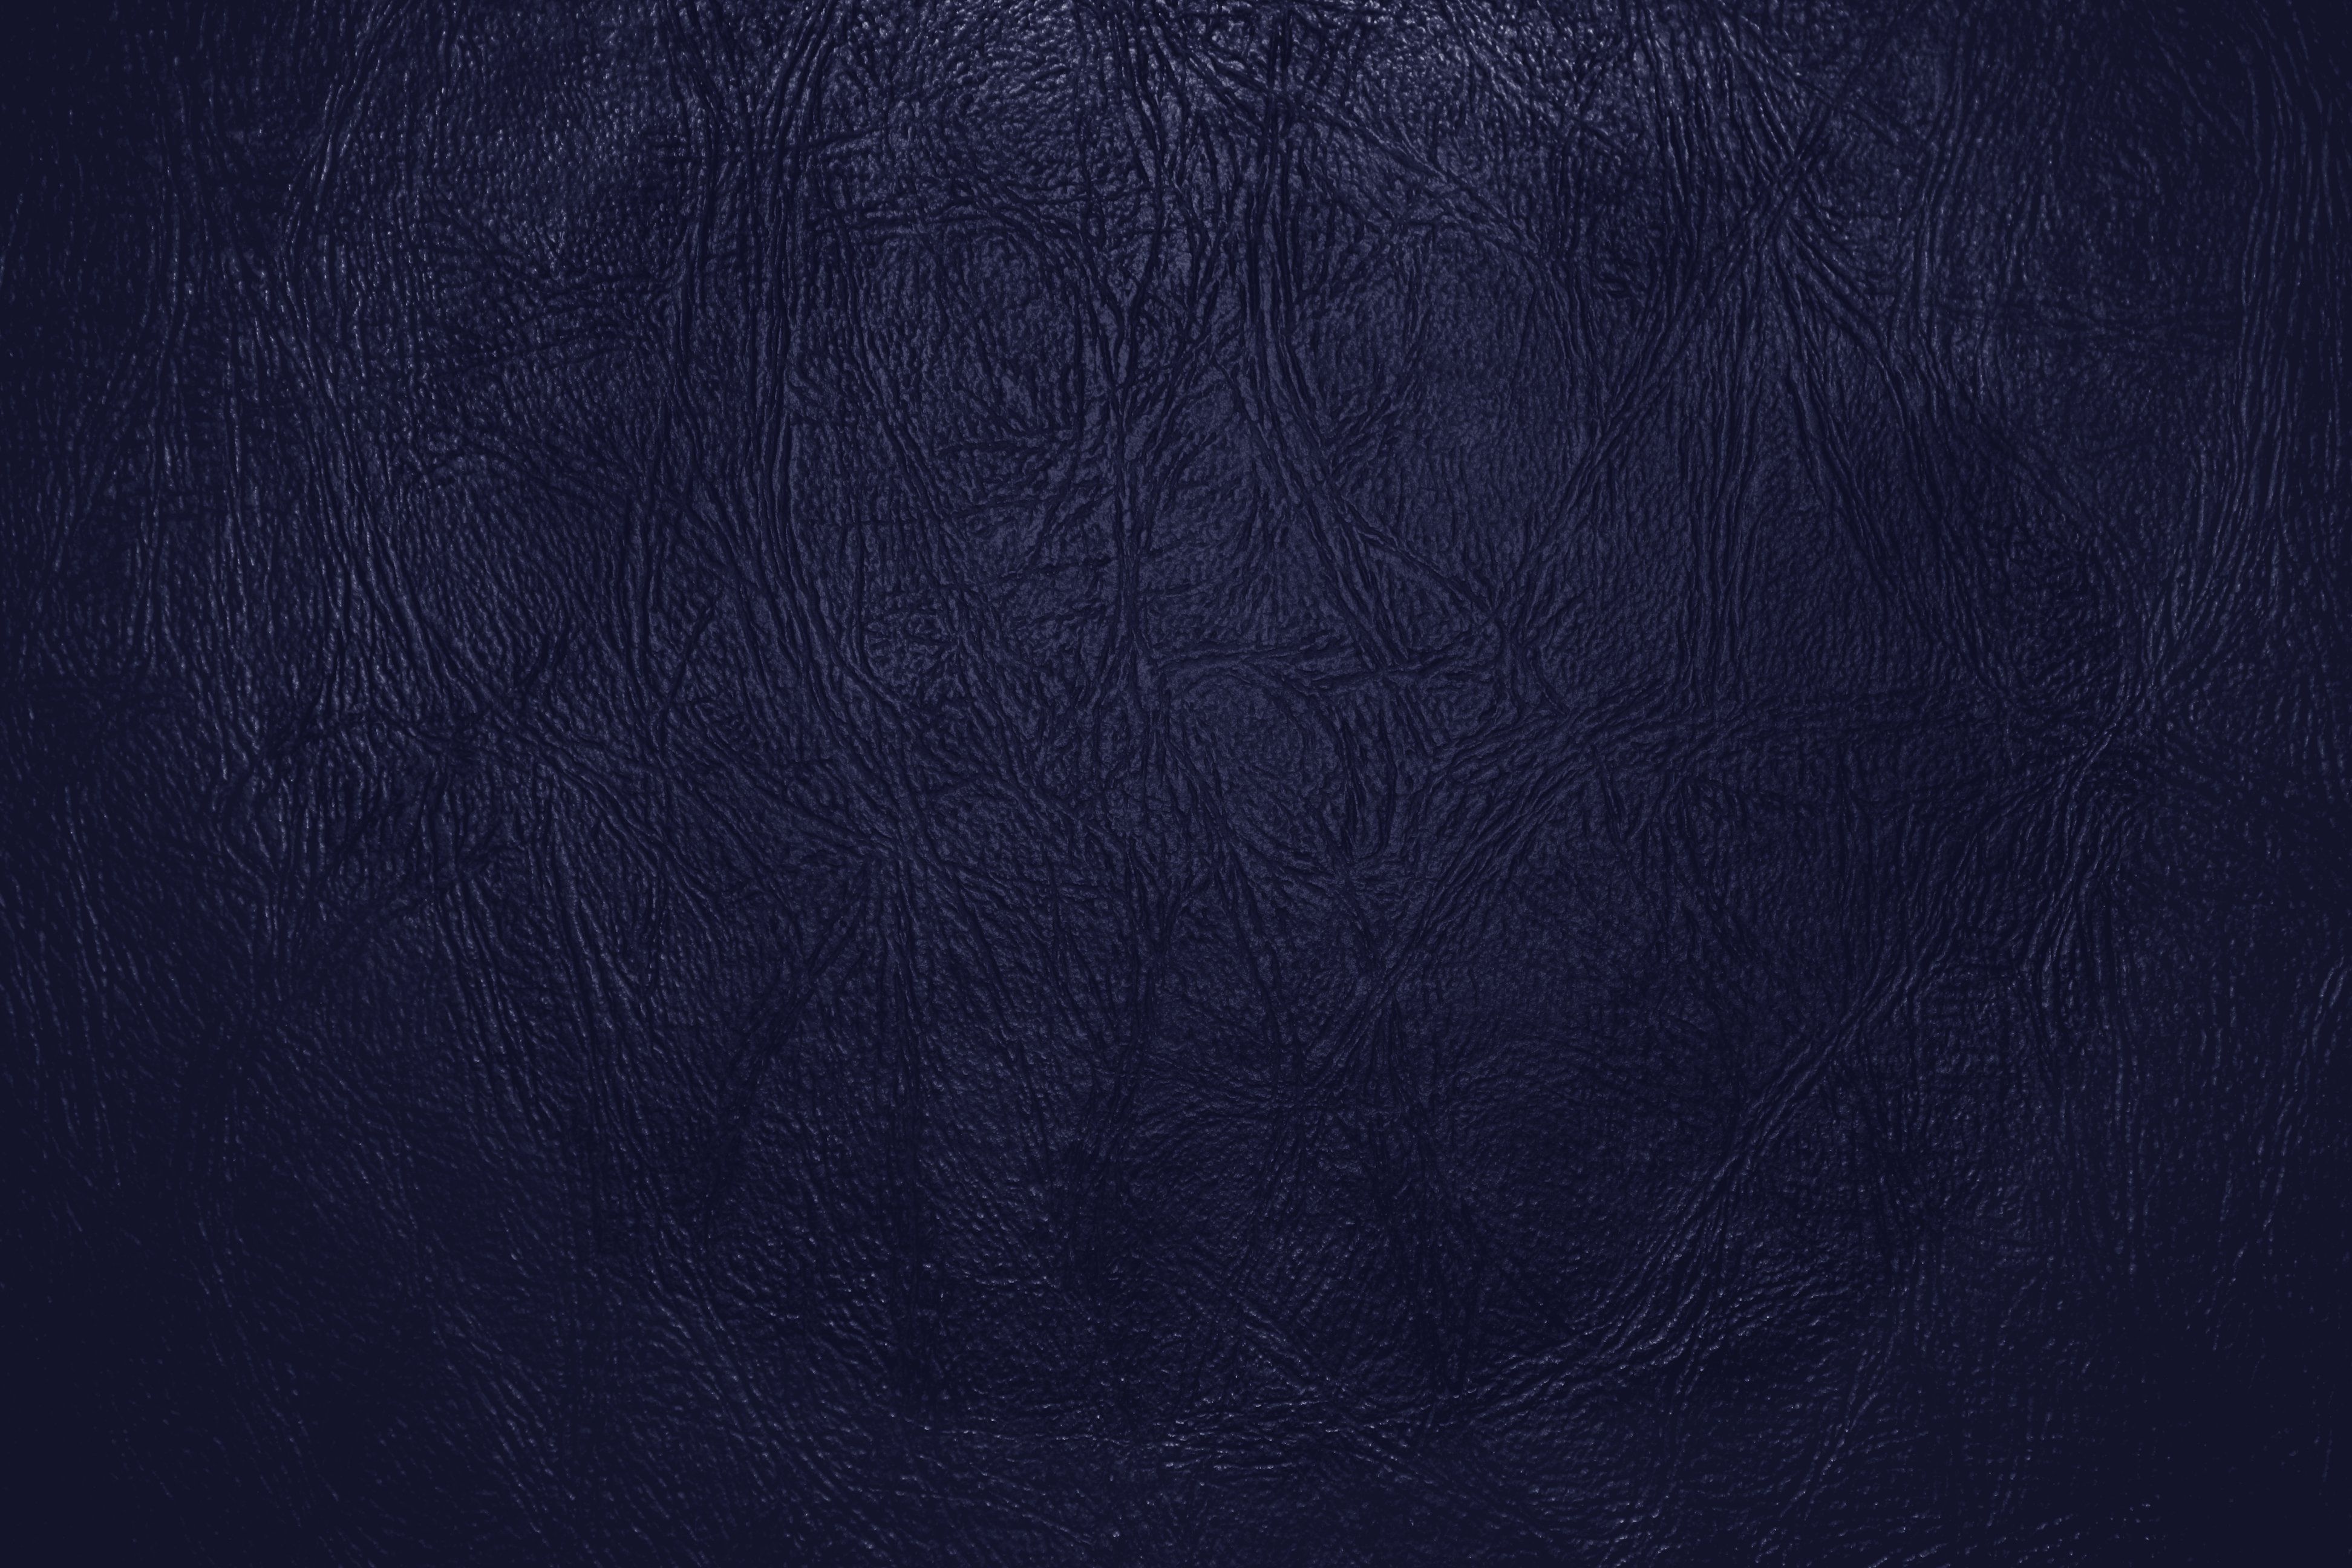 Dark Blue Texture Wallpaper Deskx2592 px 1.26 MB Abstract